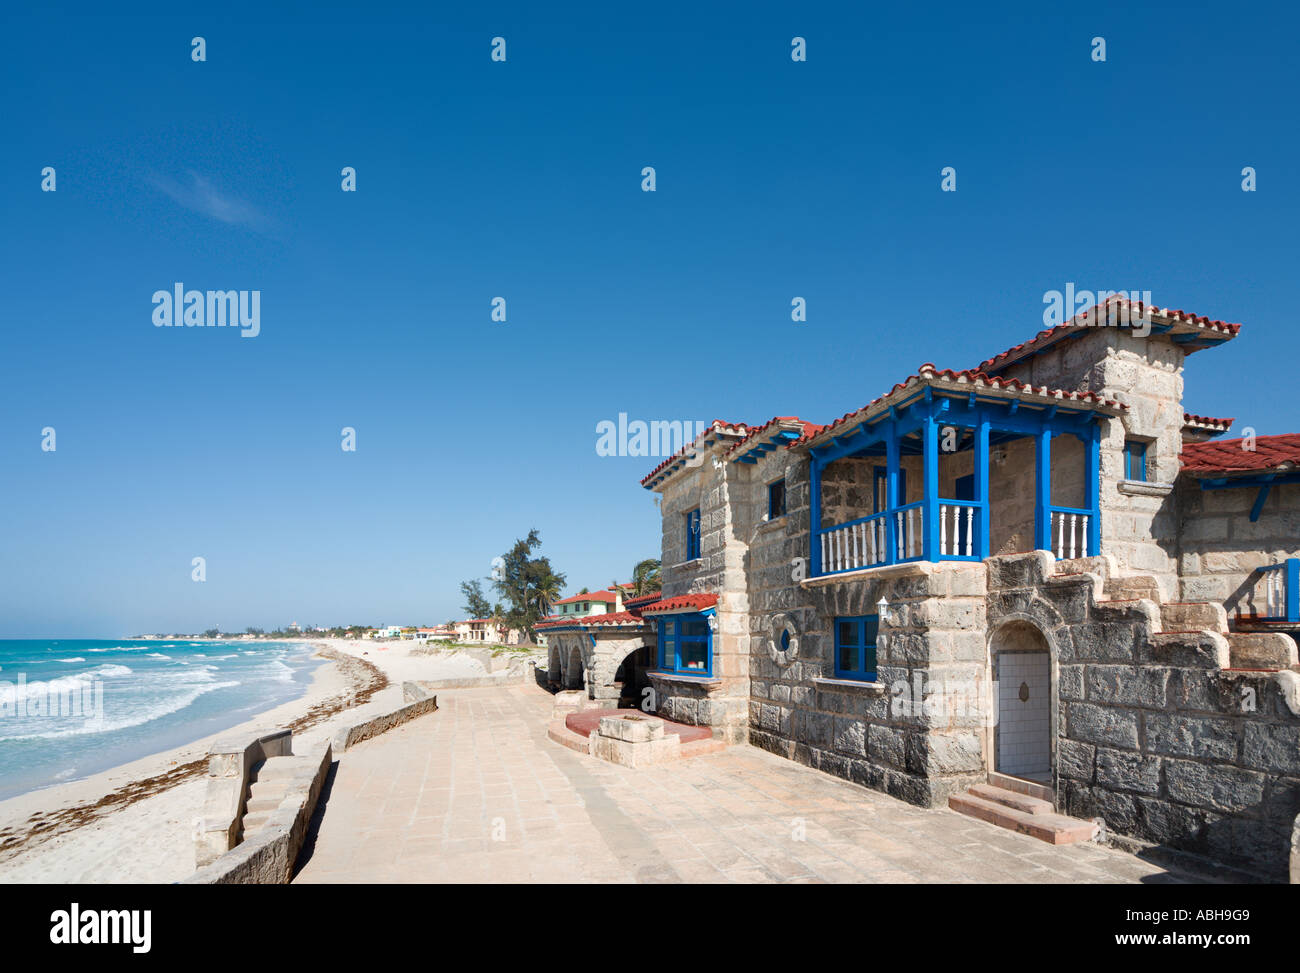 La Casa de Al Restaurant (the former vacation home of Al Capone), Varadero, Cuba Stock Photo